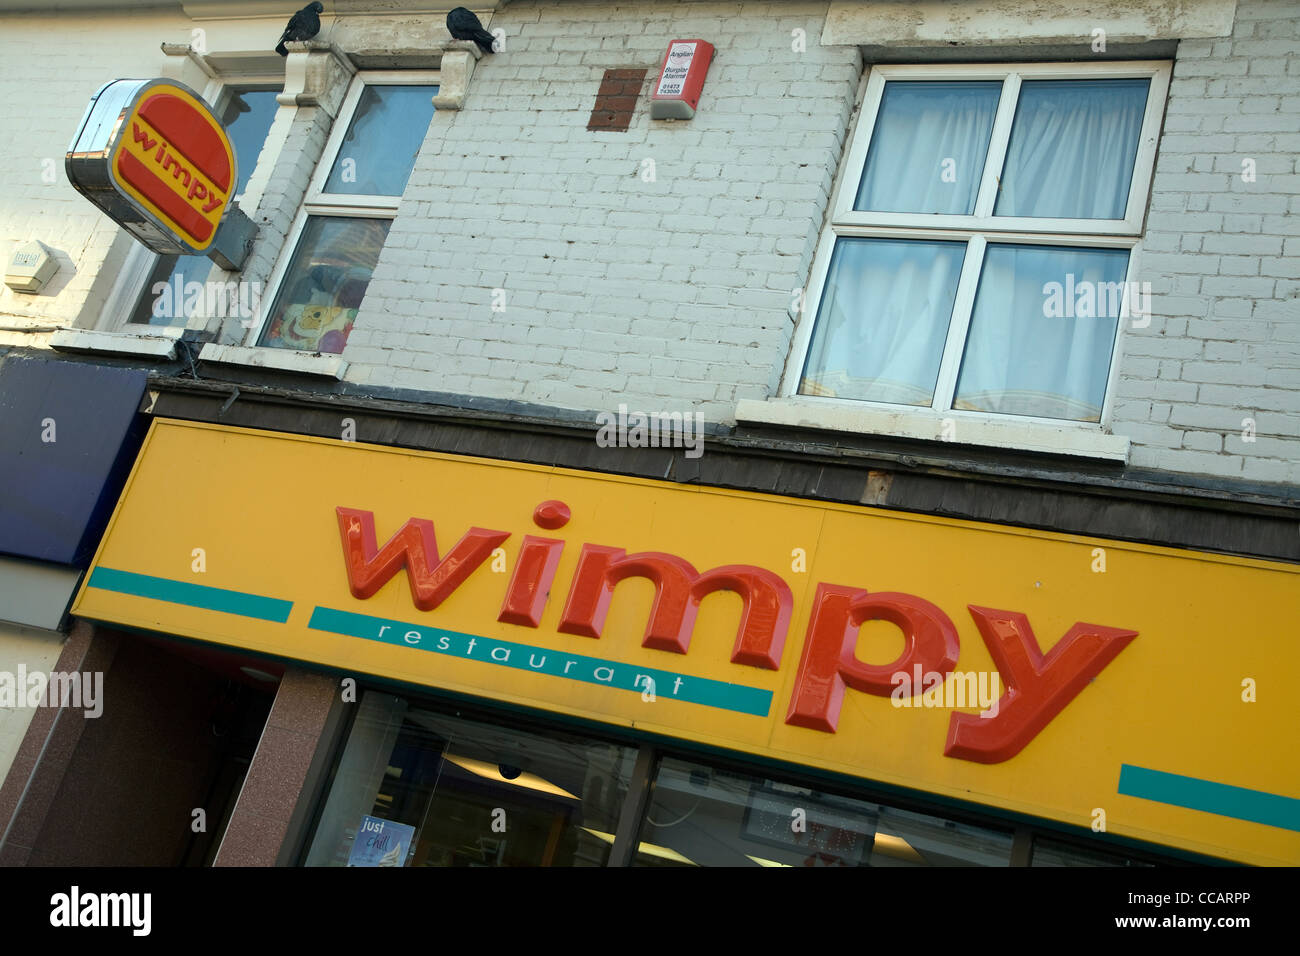 WIMPY, Sedgefield - 2 Ext 1 N - Restaurant Reviews & Photos - Tripadvisor